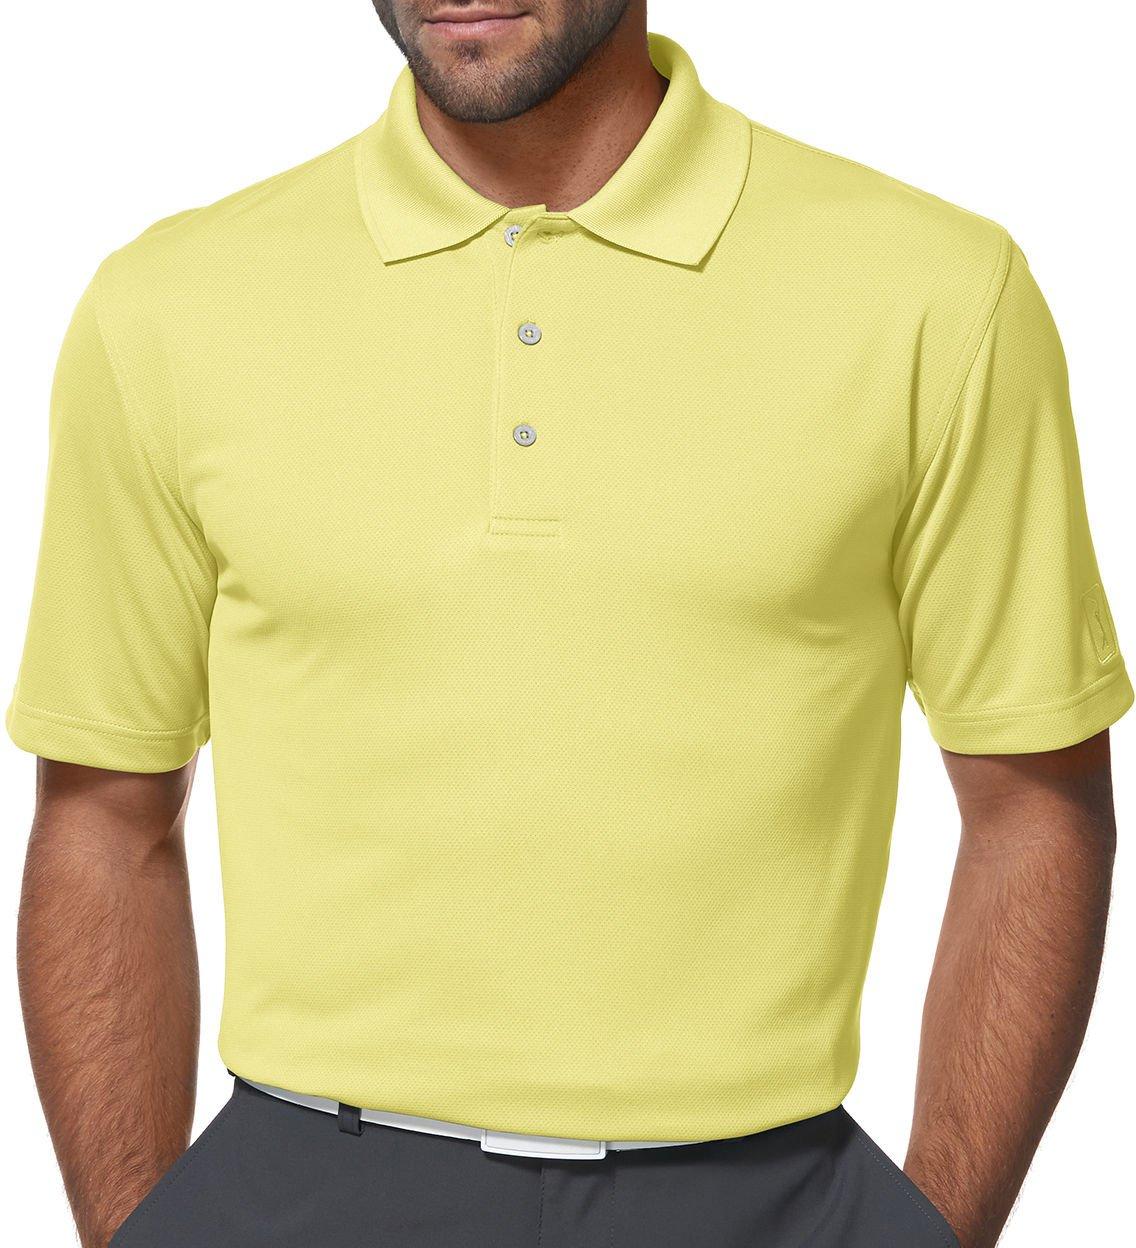  Big and Tall Tshirts Shirts for Men Funny Shirts for Men Golf  Polo Shirts for Men Tshirts Shirts for Men Yellow Polo Shirt Men White  Shirts for Men Men's Polo Shirts 